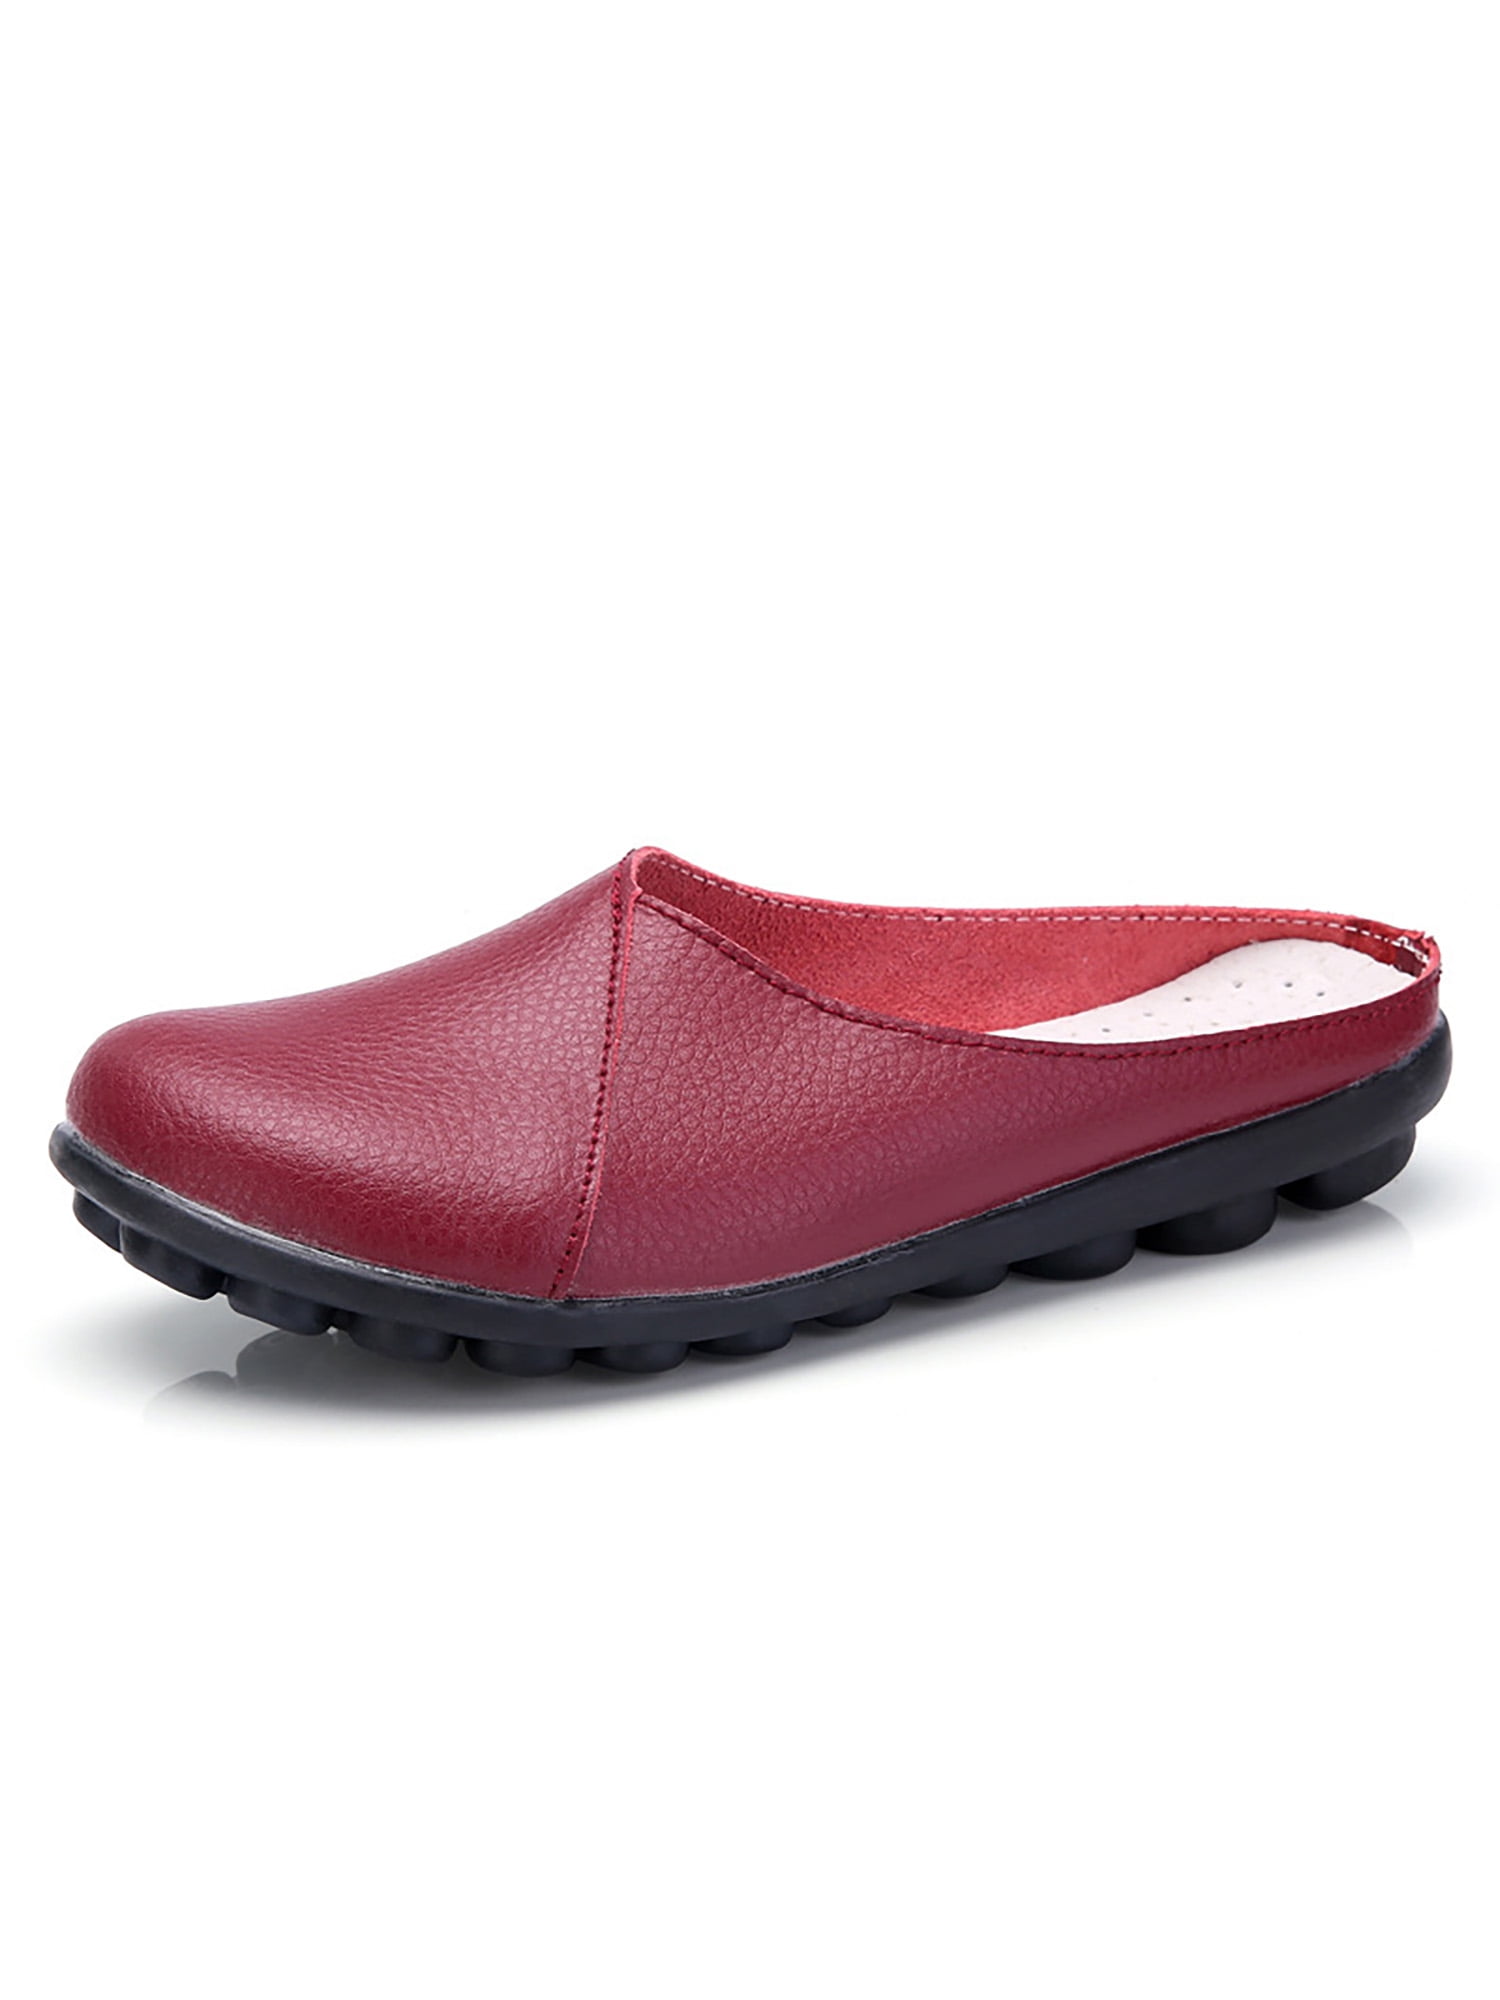 Crocowalk Womens Flats Comfort Mules Slip On Clogs Women Leather Mule  Walking Lightweight Closed Toe Casual Shoes Wine Red 4